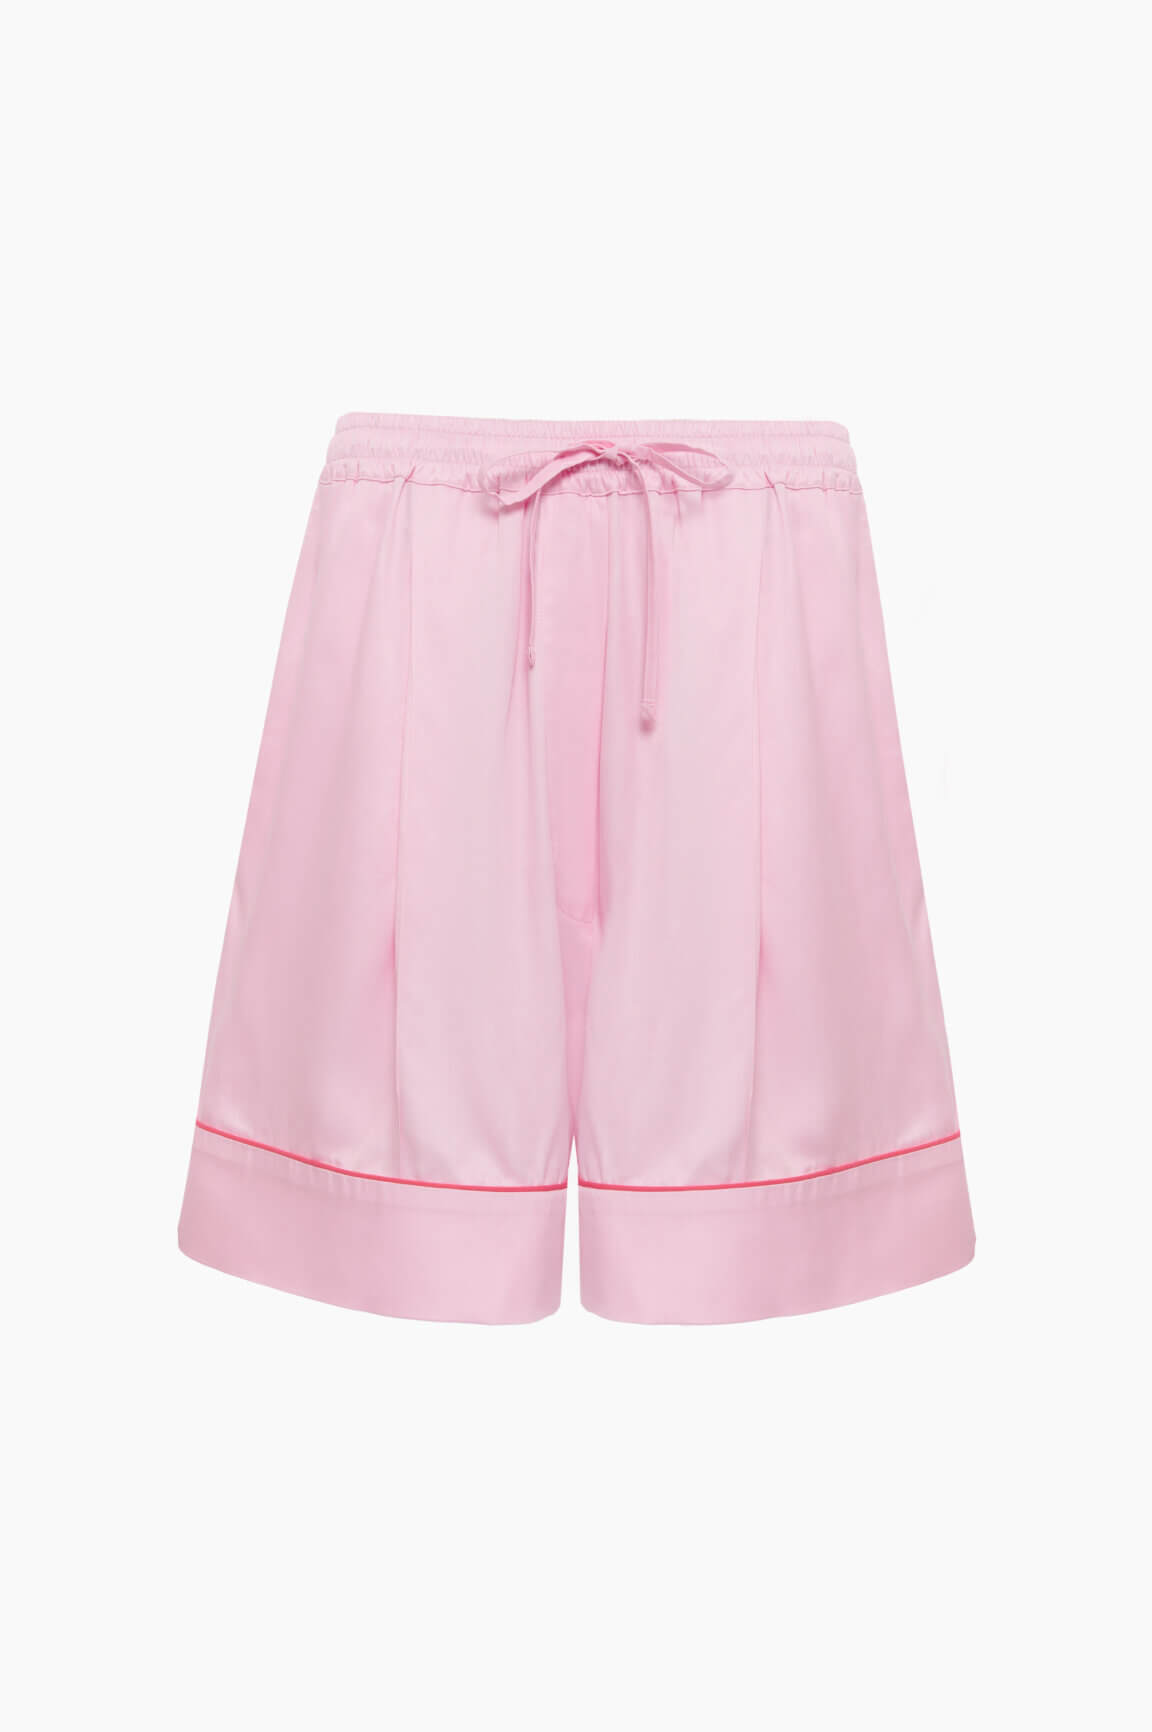 Pastelle Oversized Shorts in Pink | Sleeper